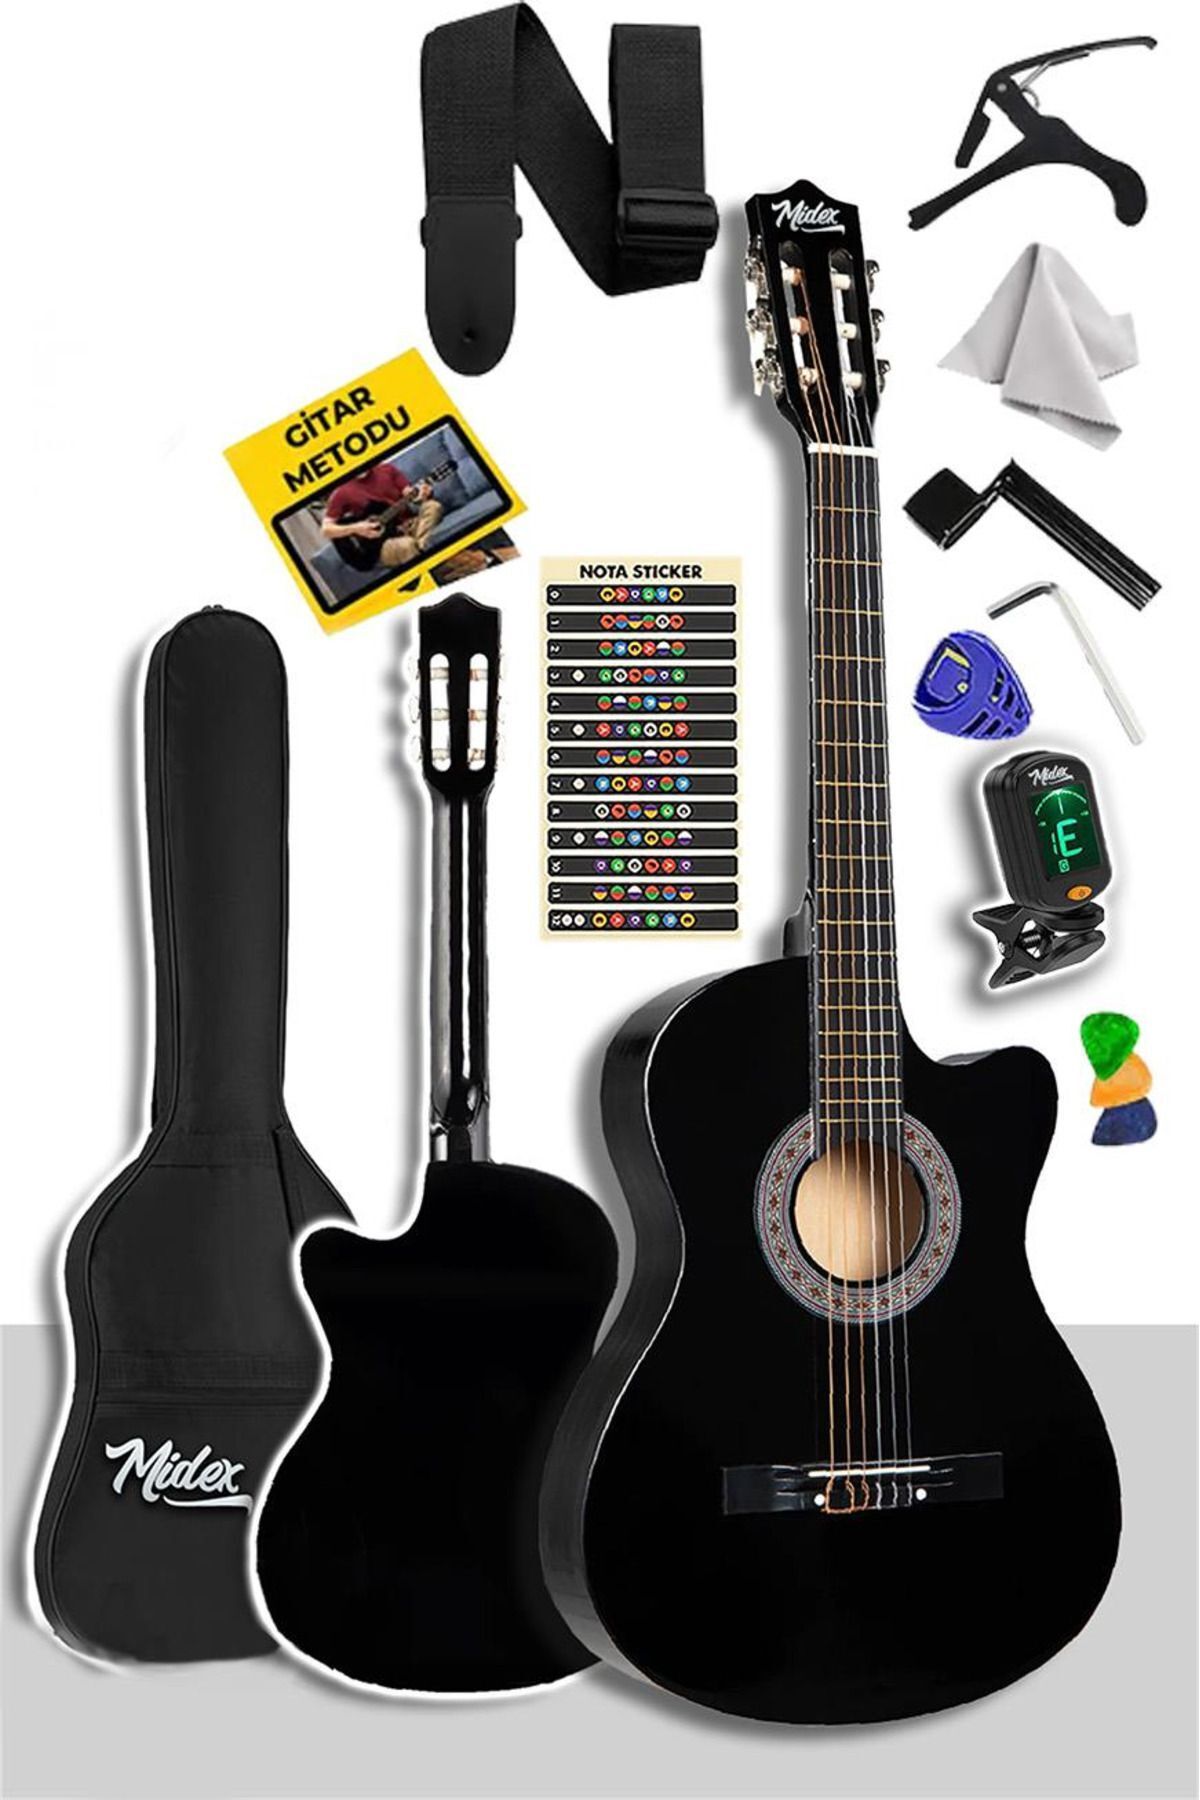 Midex Cg-395bk Siyah Klasik Gitar 4/4 Sap Ayarlı Kesik Kasa Full Set (ÇANTA ASKI TUNER METOD PENA)